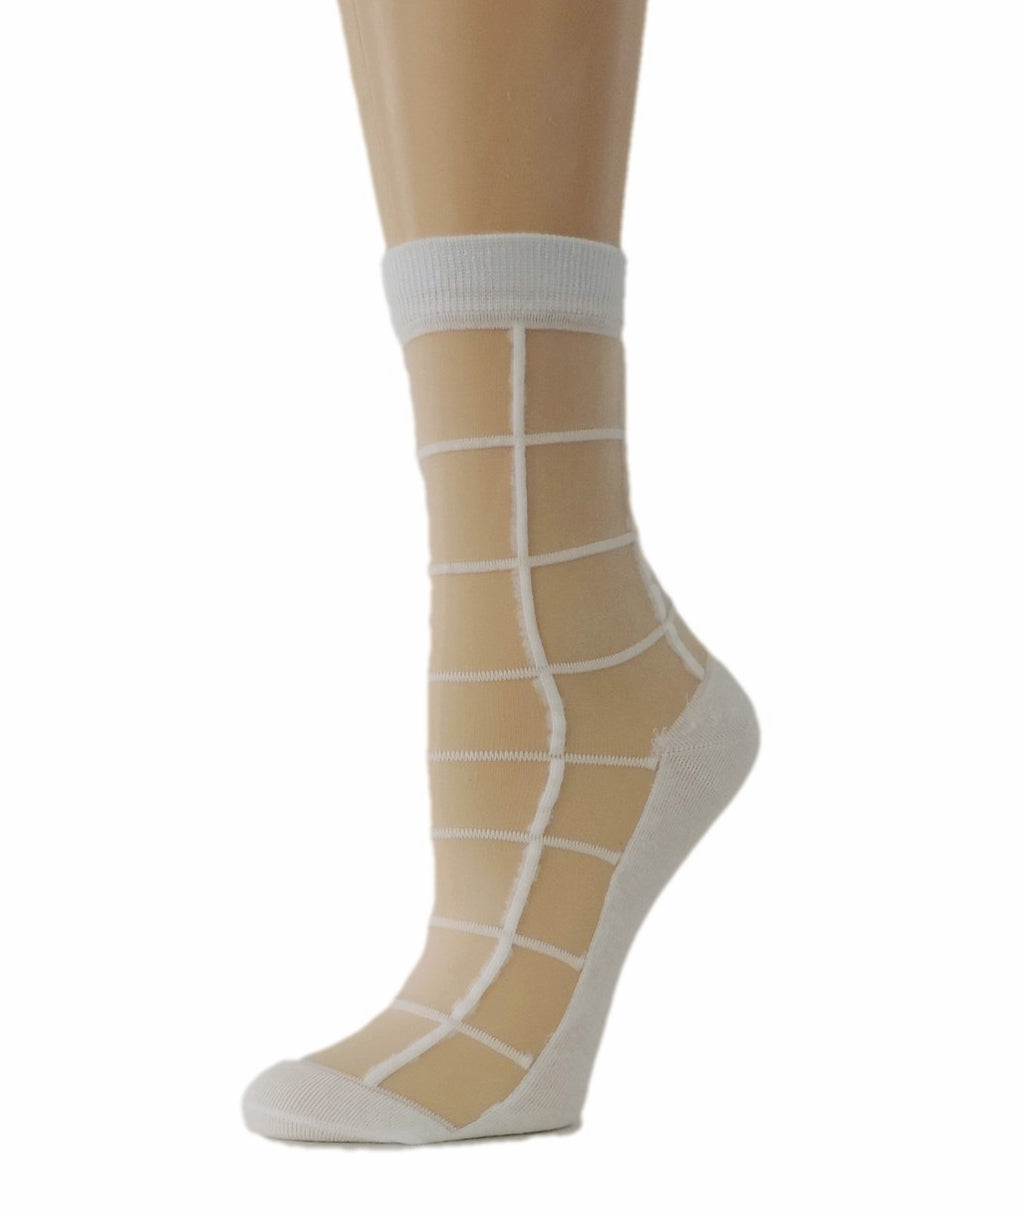 Calm White Square Sheer Socks - Global Trendz Fashion®